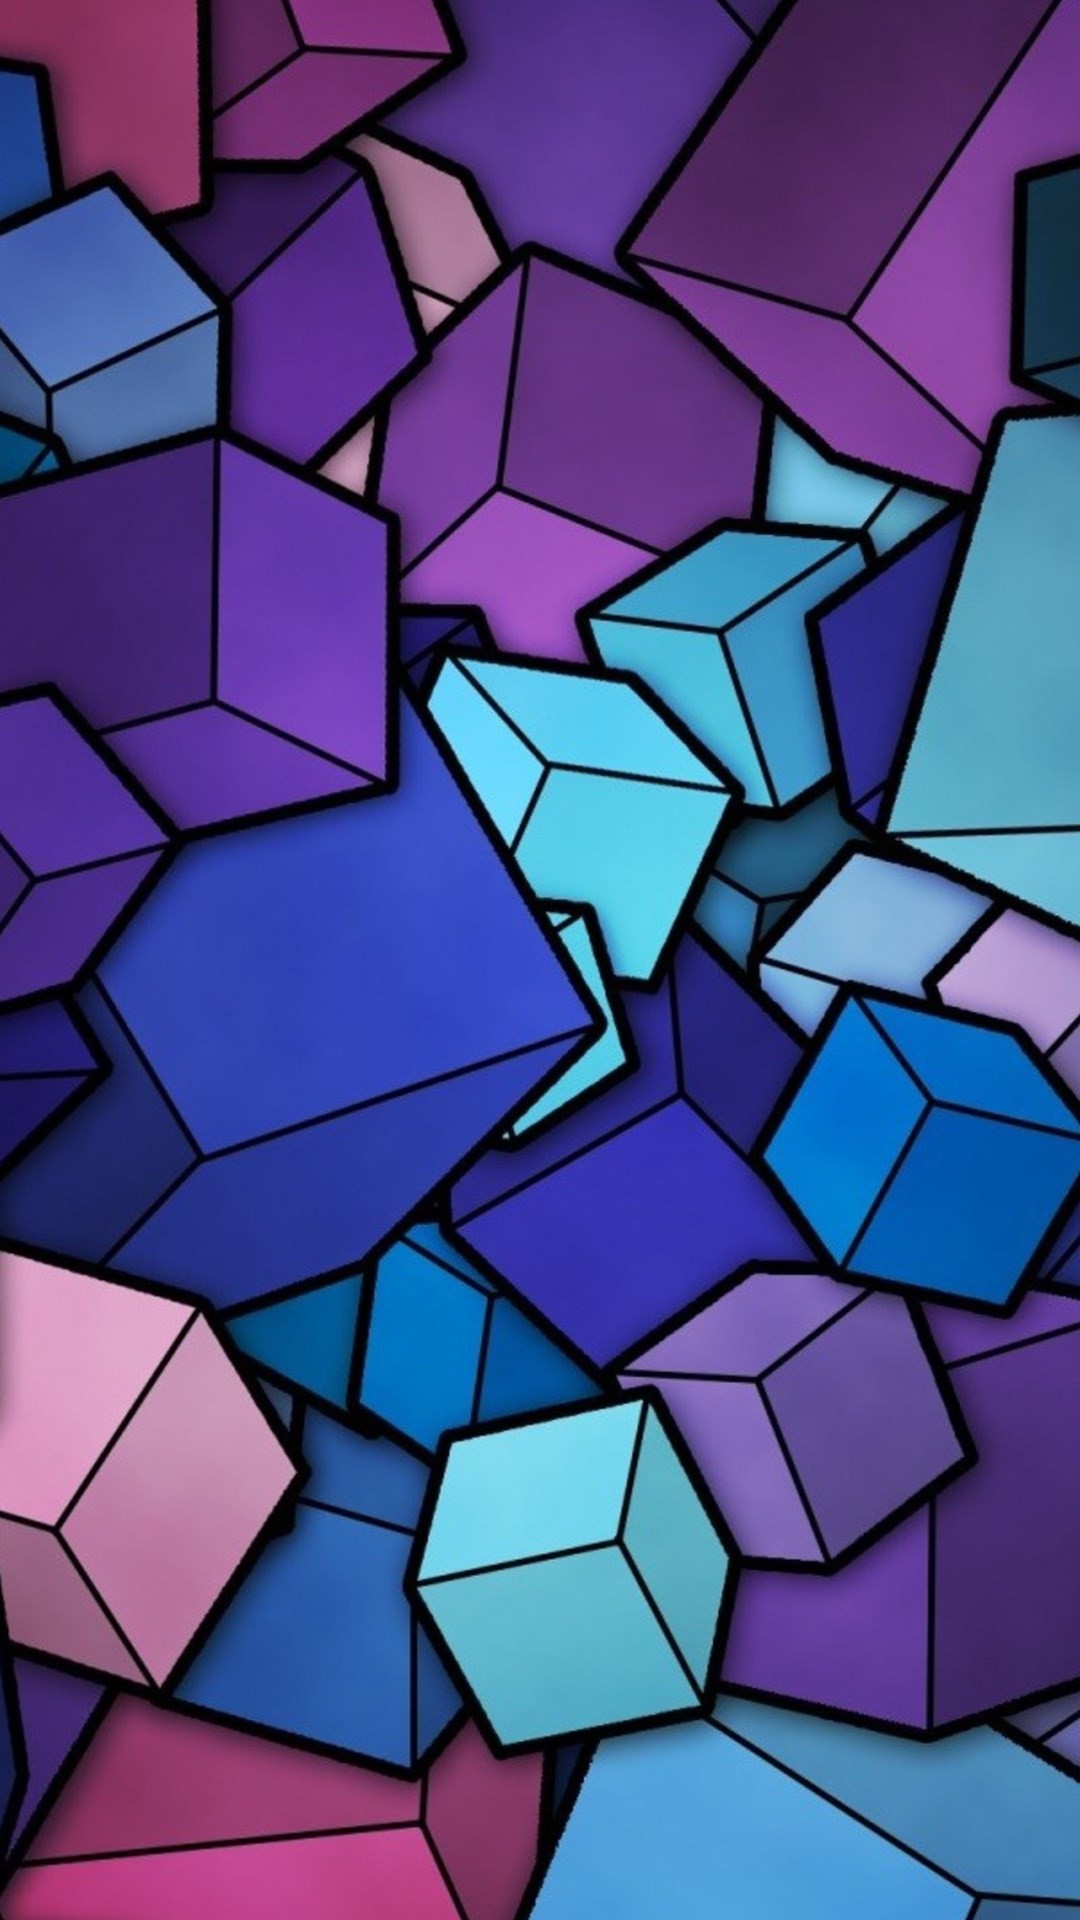 1080x1920 Abstract Blue Cyan Purple Cubes iPhone 6 Plus HD Wallpaper ...